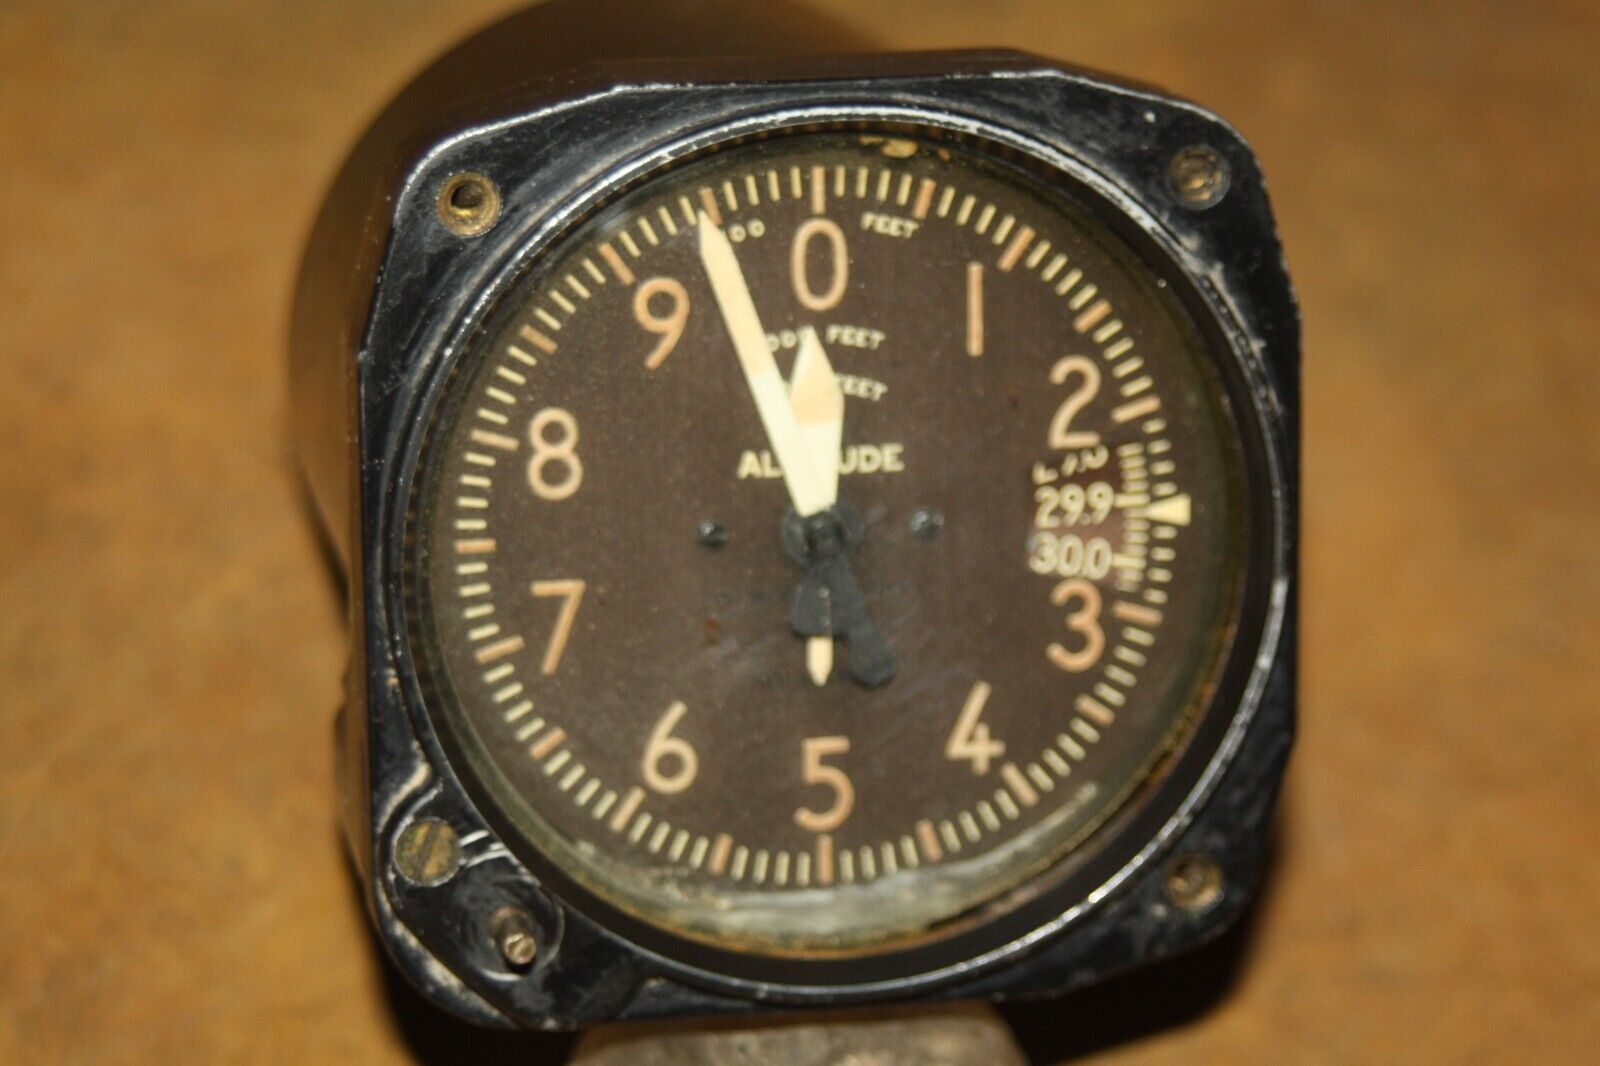 Vintage Kollsman Instruments Altitude Indicator - Altimeter - P/N 88-A-340